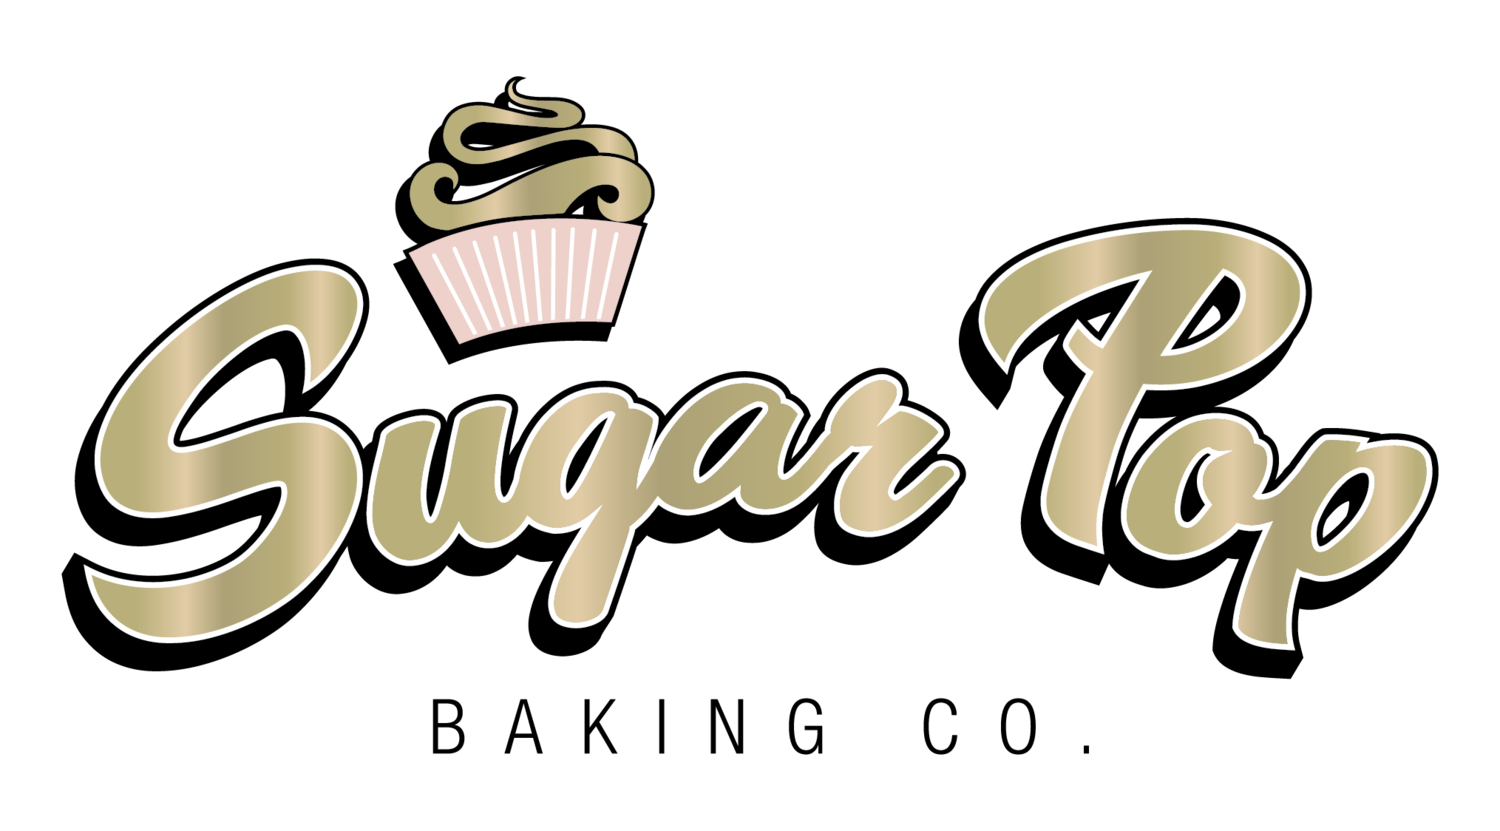 Sugar Pop Baking Co.